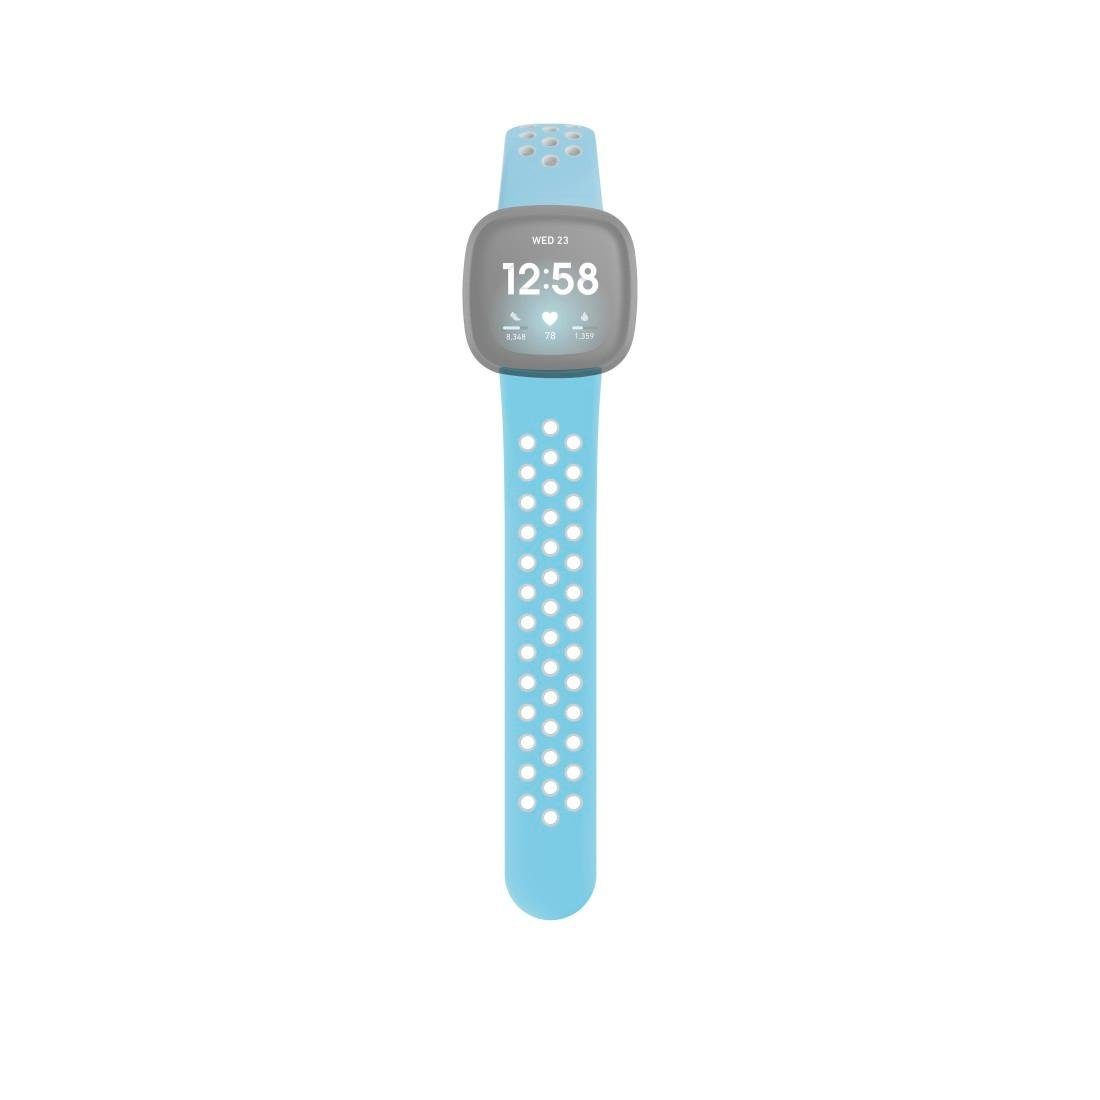 Smartwatch-Armband für Fitbit Ersatzarmband 22 cm (2), cm/21 Versa hellblau Hama 3/4/Sense Silikon,